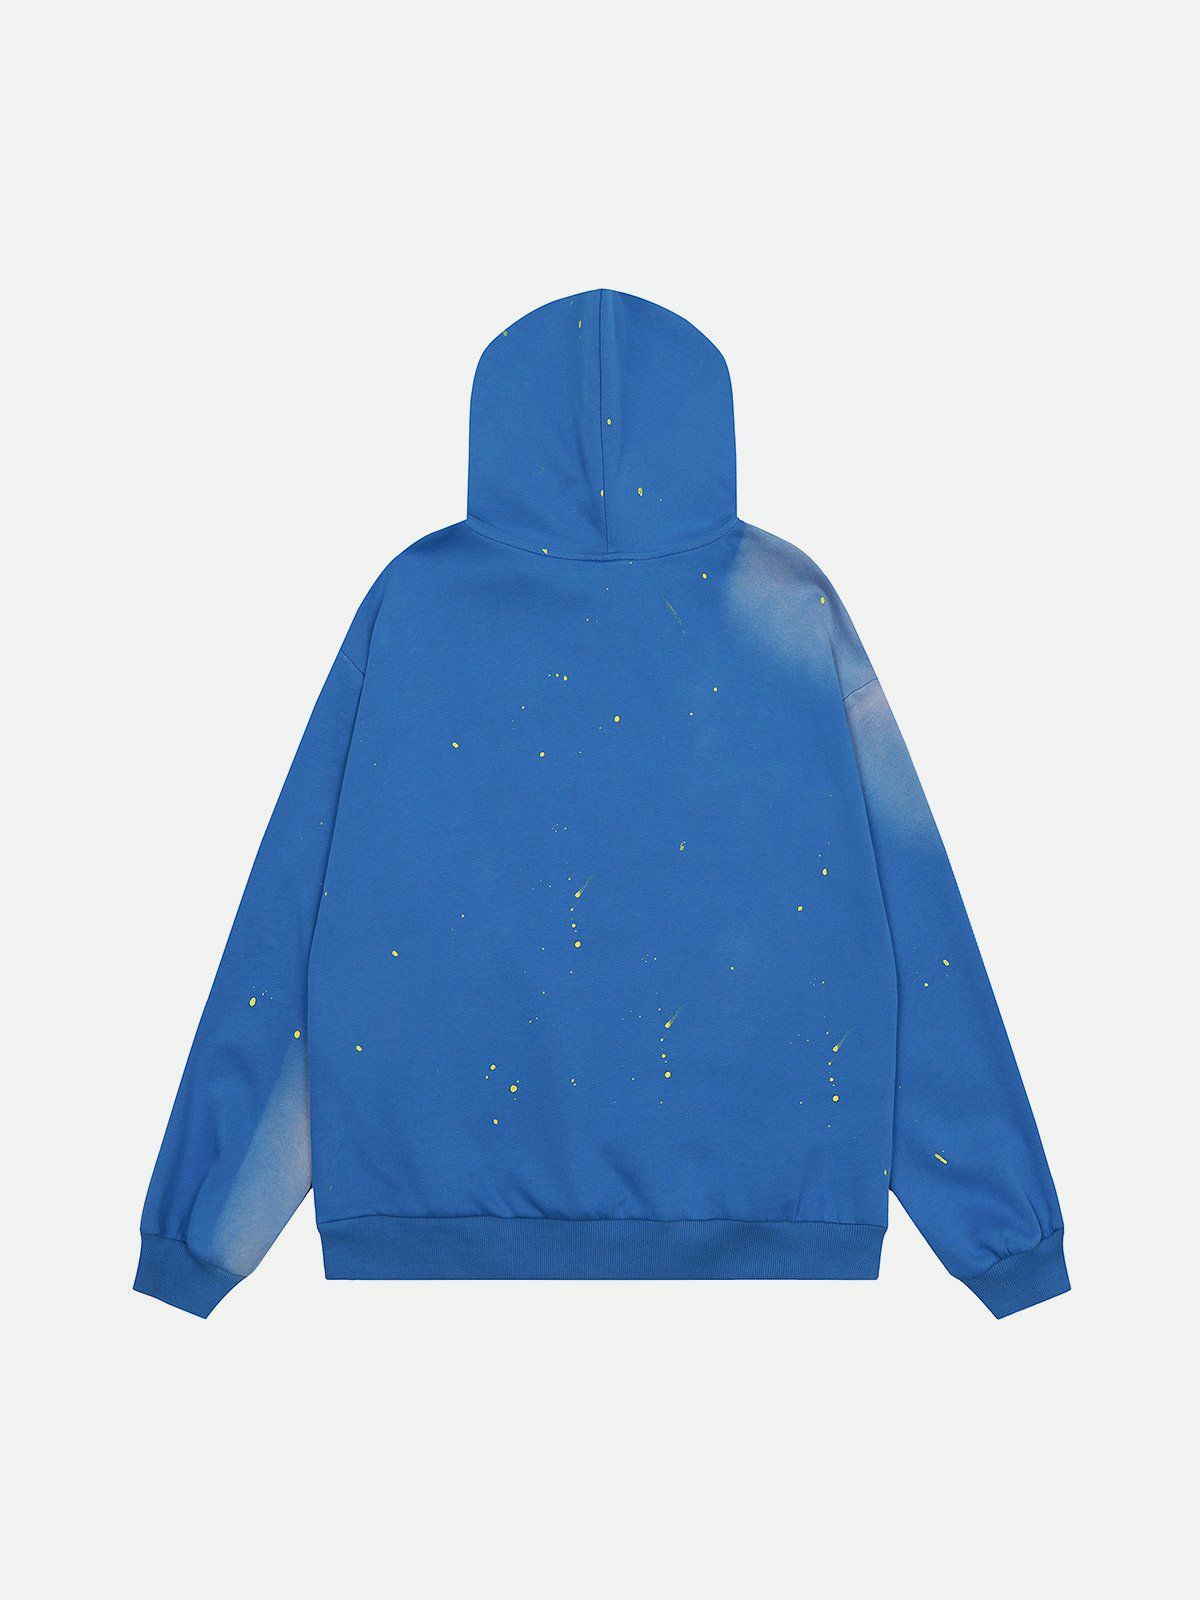 vibrant ink washed hoodie edgy streetwear 4695